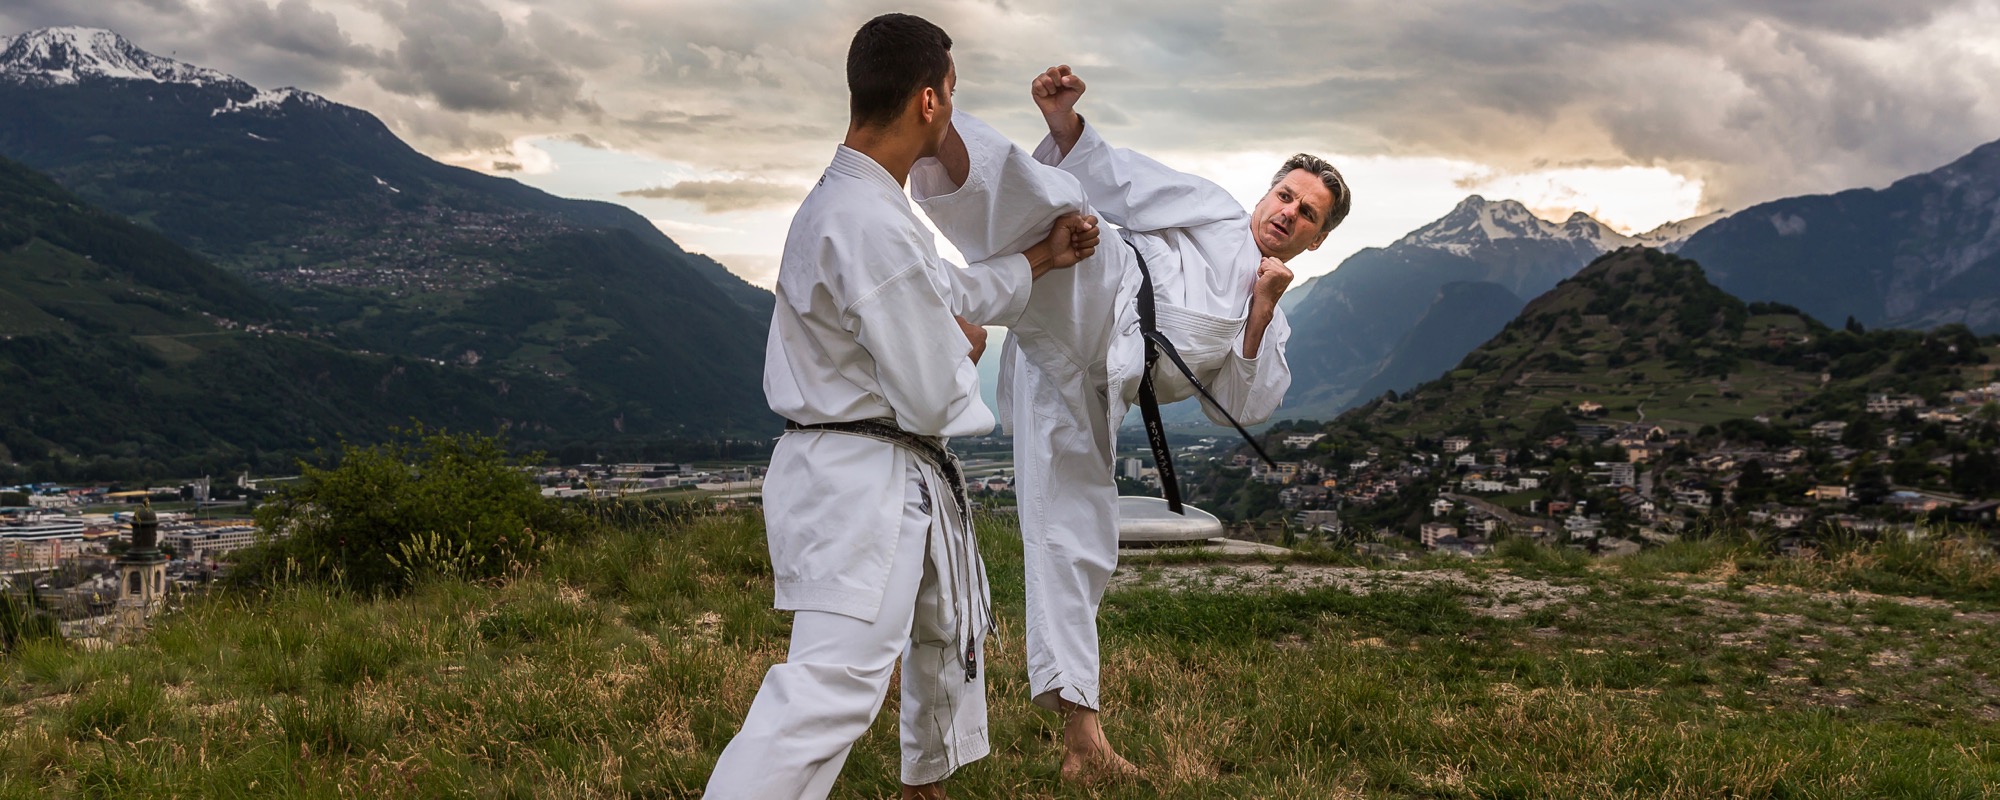 Olivier Knupfer 7e Dan Hugues Michaud 5e Dan Karate Club Valais Sion Suisse Switzerland